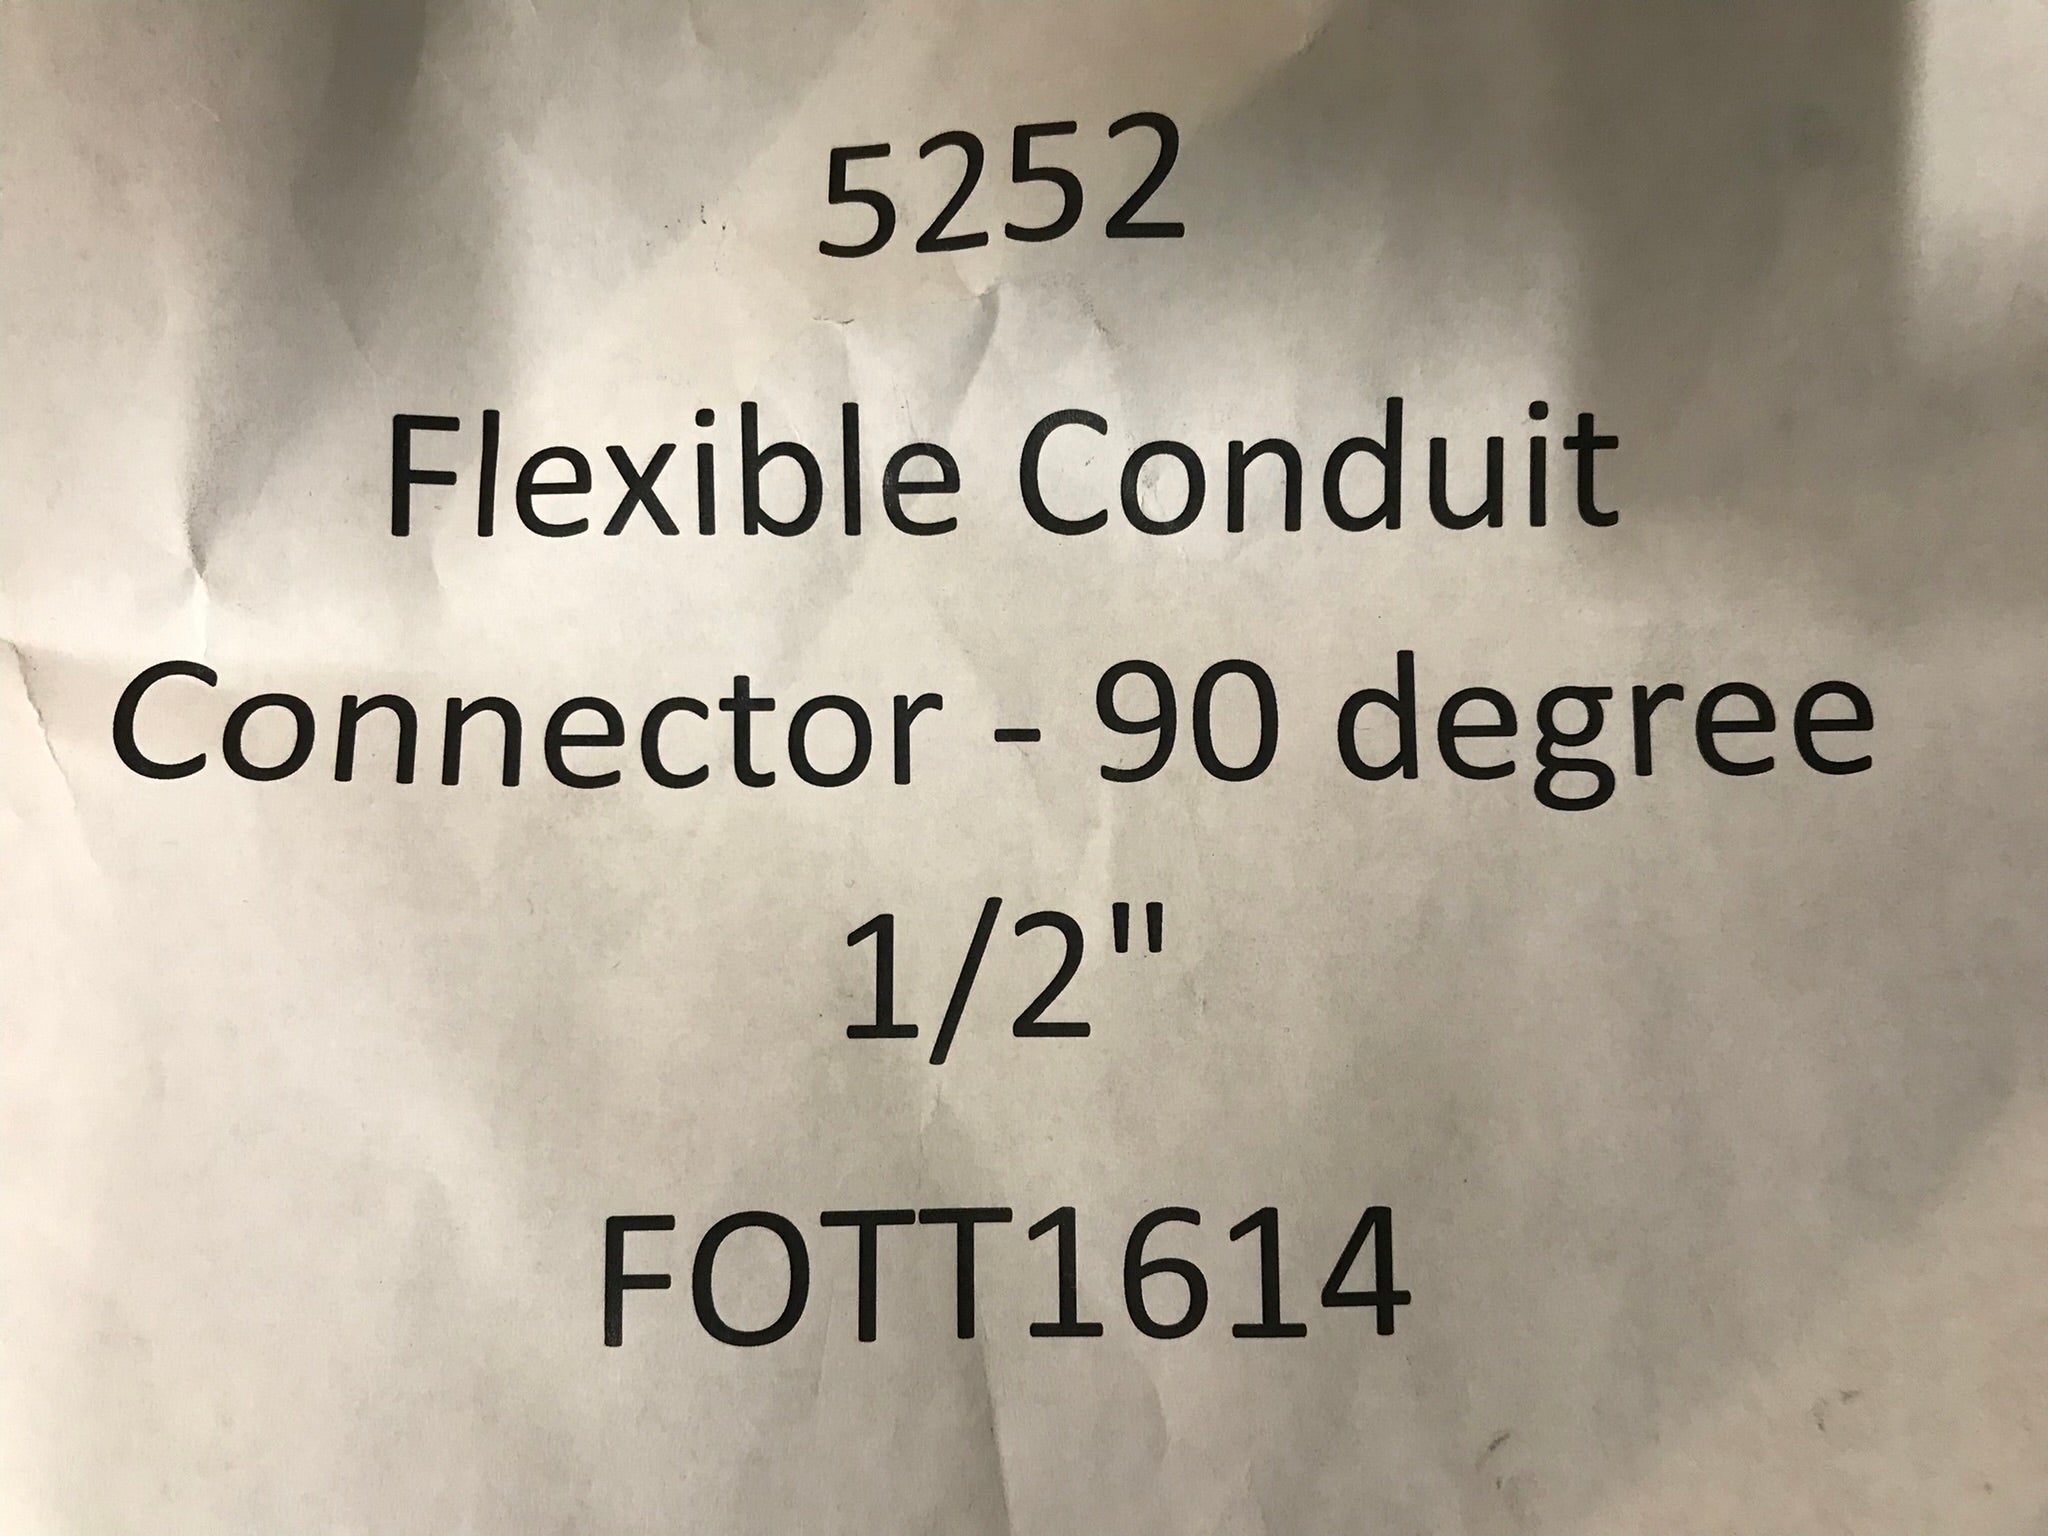 Flexible Conduit Connector - 90 degree 1/2"